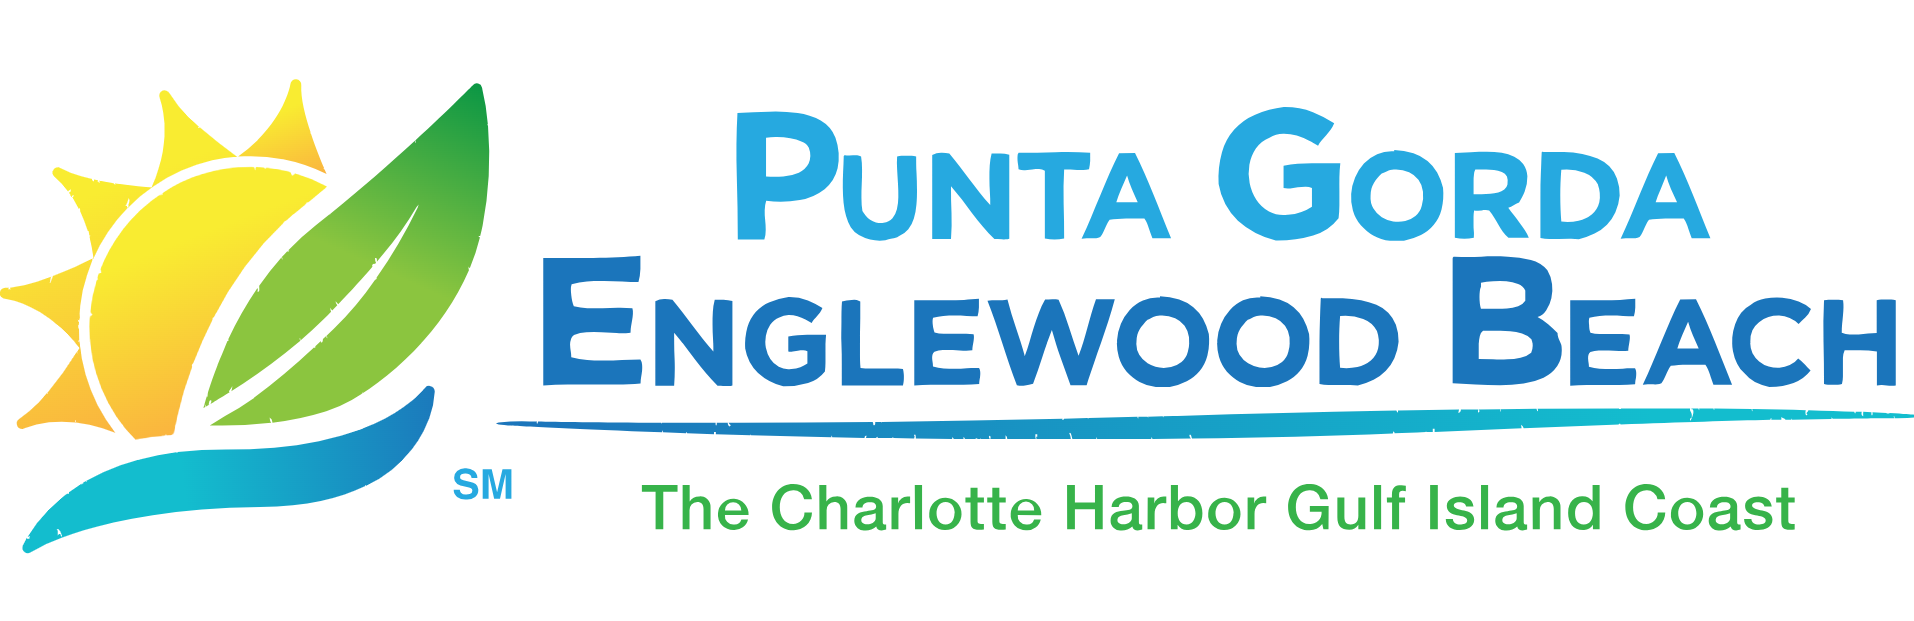 Punta Gorda Englewood Beach Logo